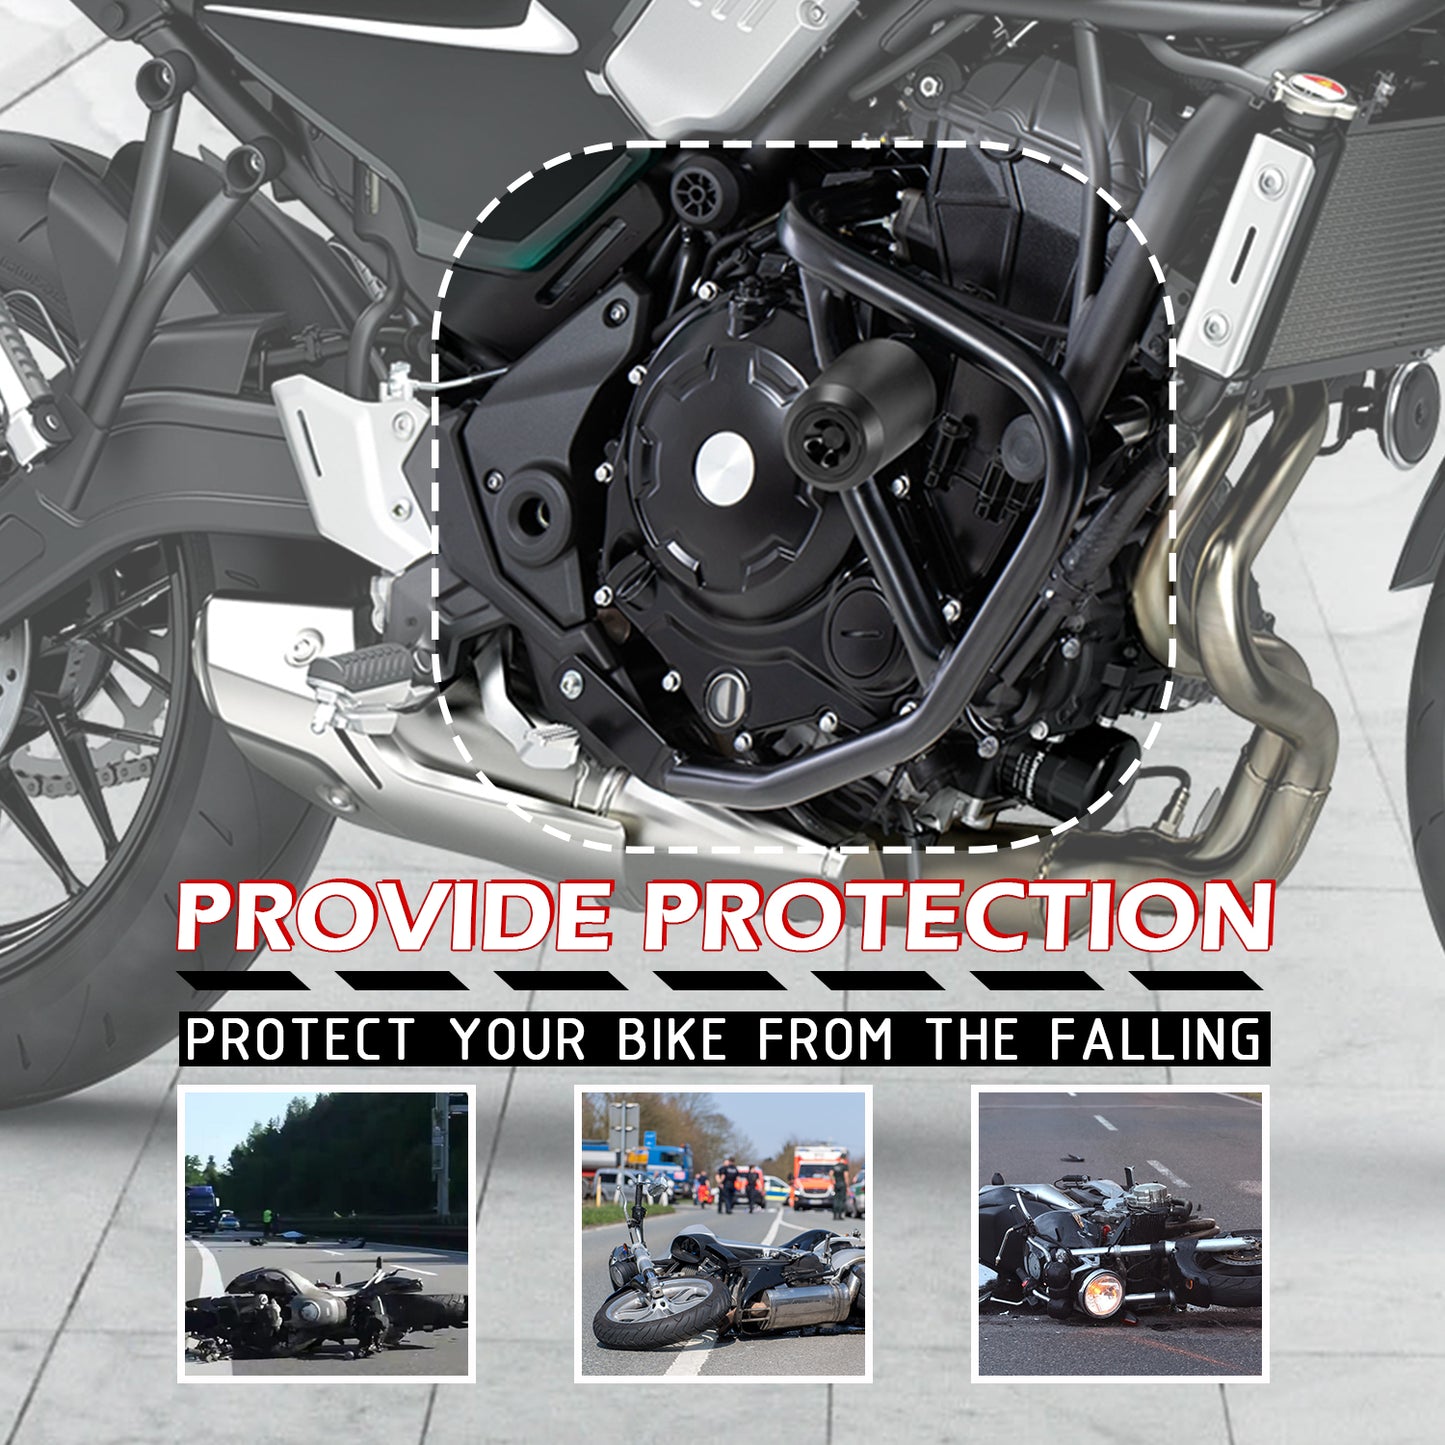 Z650 Z650RS Motorbike Frame Crash Bar Buffer Falling Protector For Kawasaki Z 650 RS 650RS 2017-2023 Highway Engine Guard Bumper